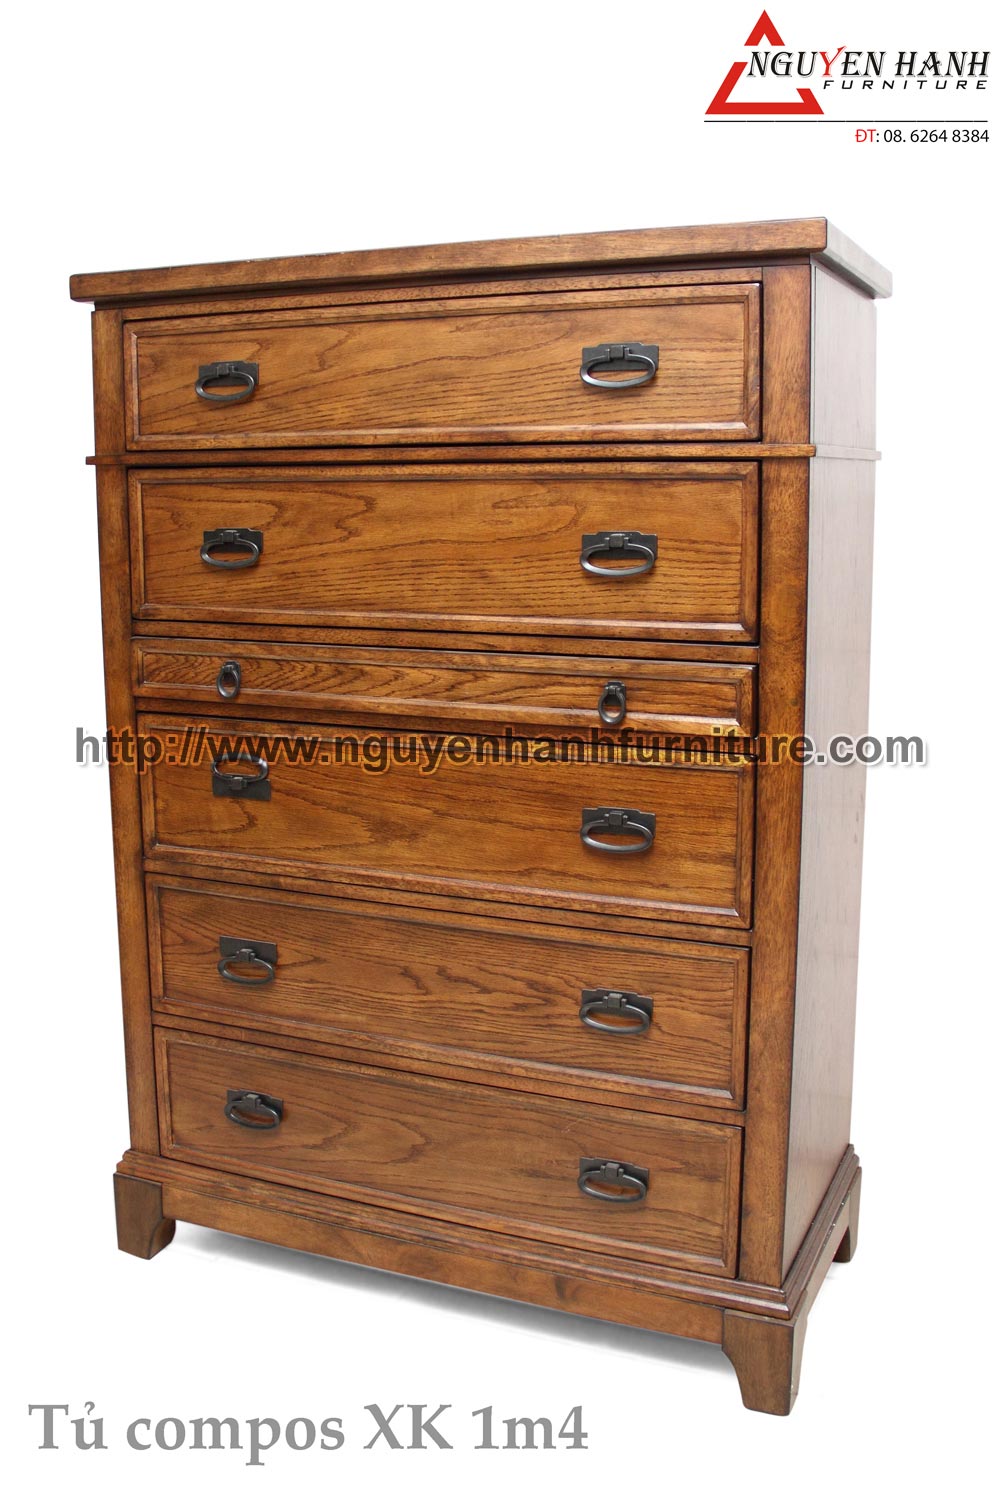 Name product: 1m4 Export-standard compos Drawers Cabinet- Dimensions: 46 x 100 x 140cm - Description: Oak wood, Rubber wood